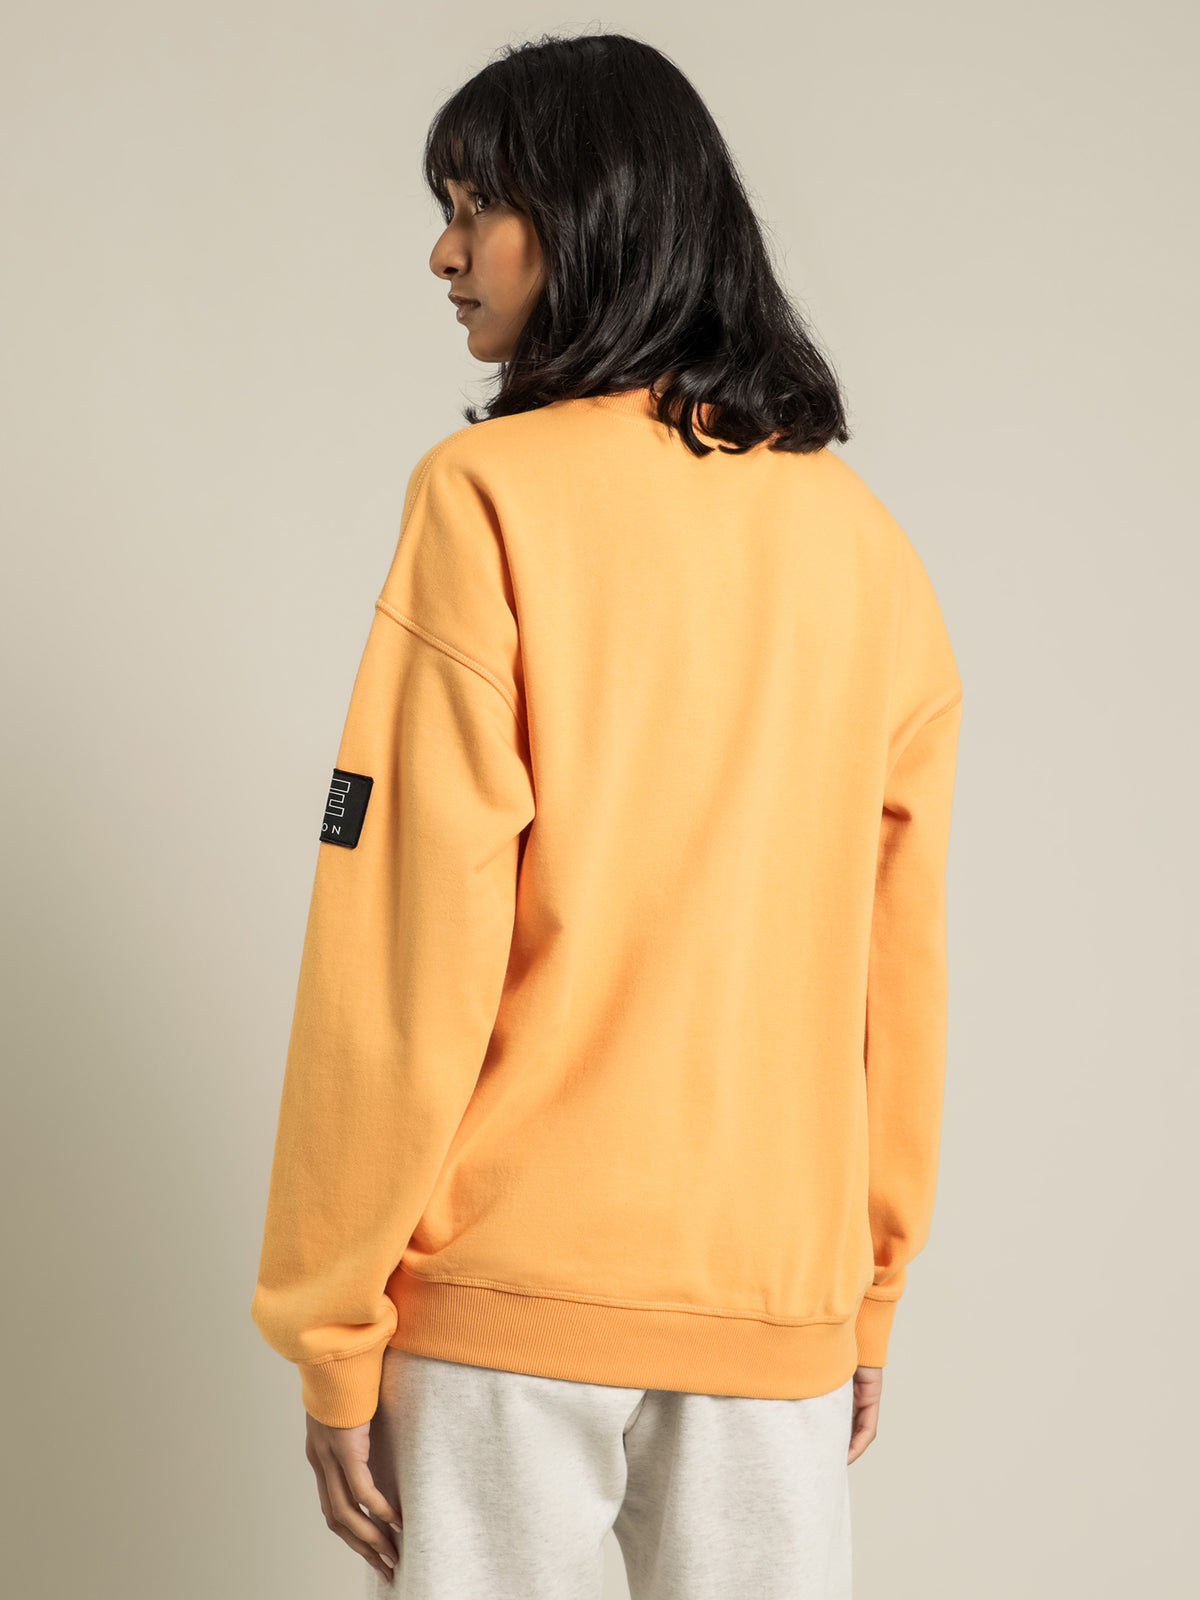 Heads Up Sweatshirt in Orange Light